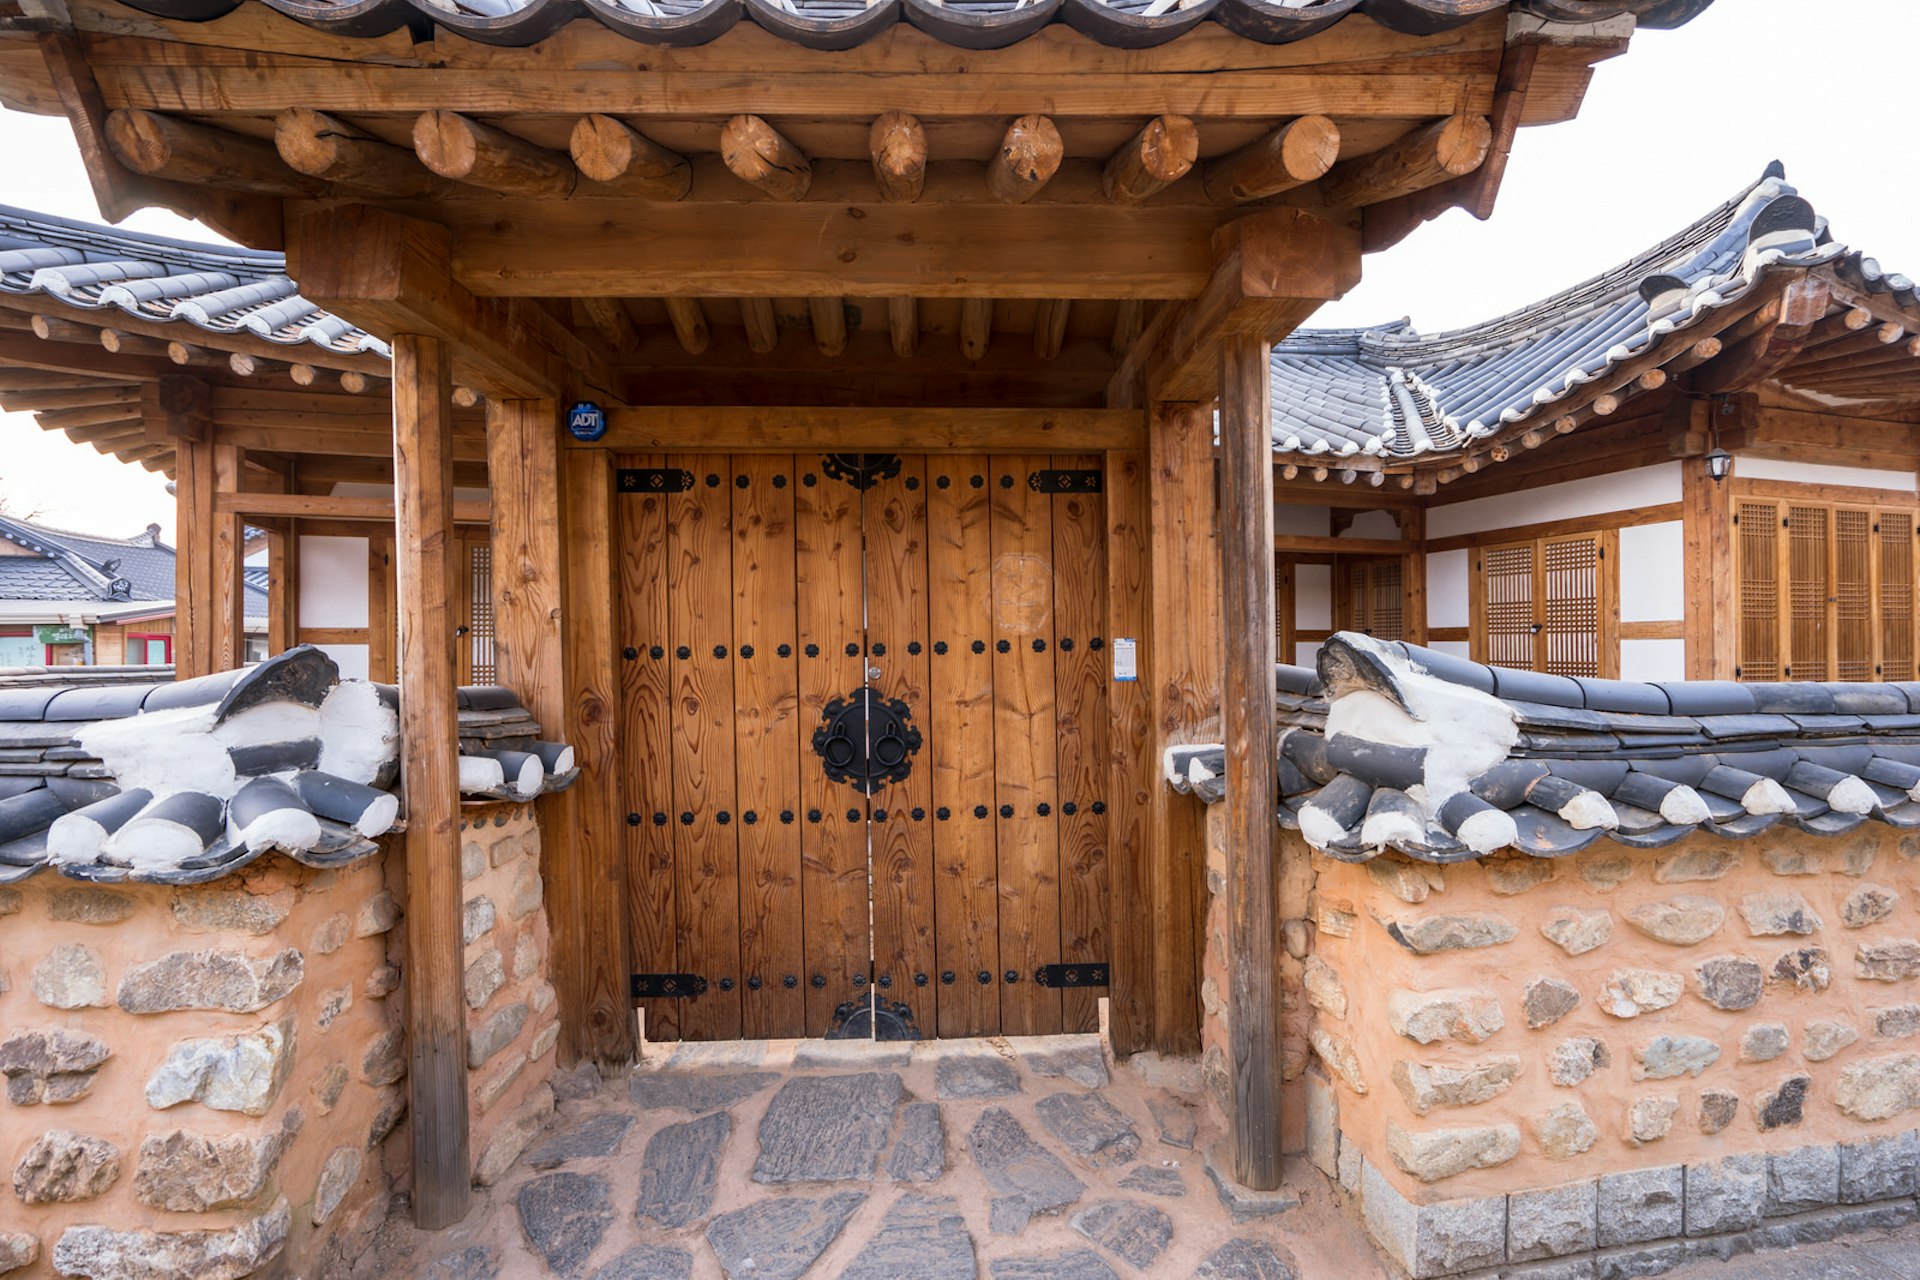 Jeonju Hanok village with over 800 traditional Korean houses remaining in central Jeonju.